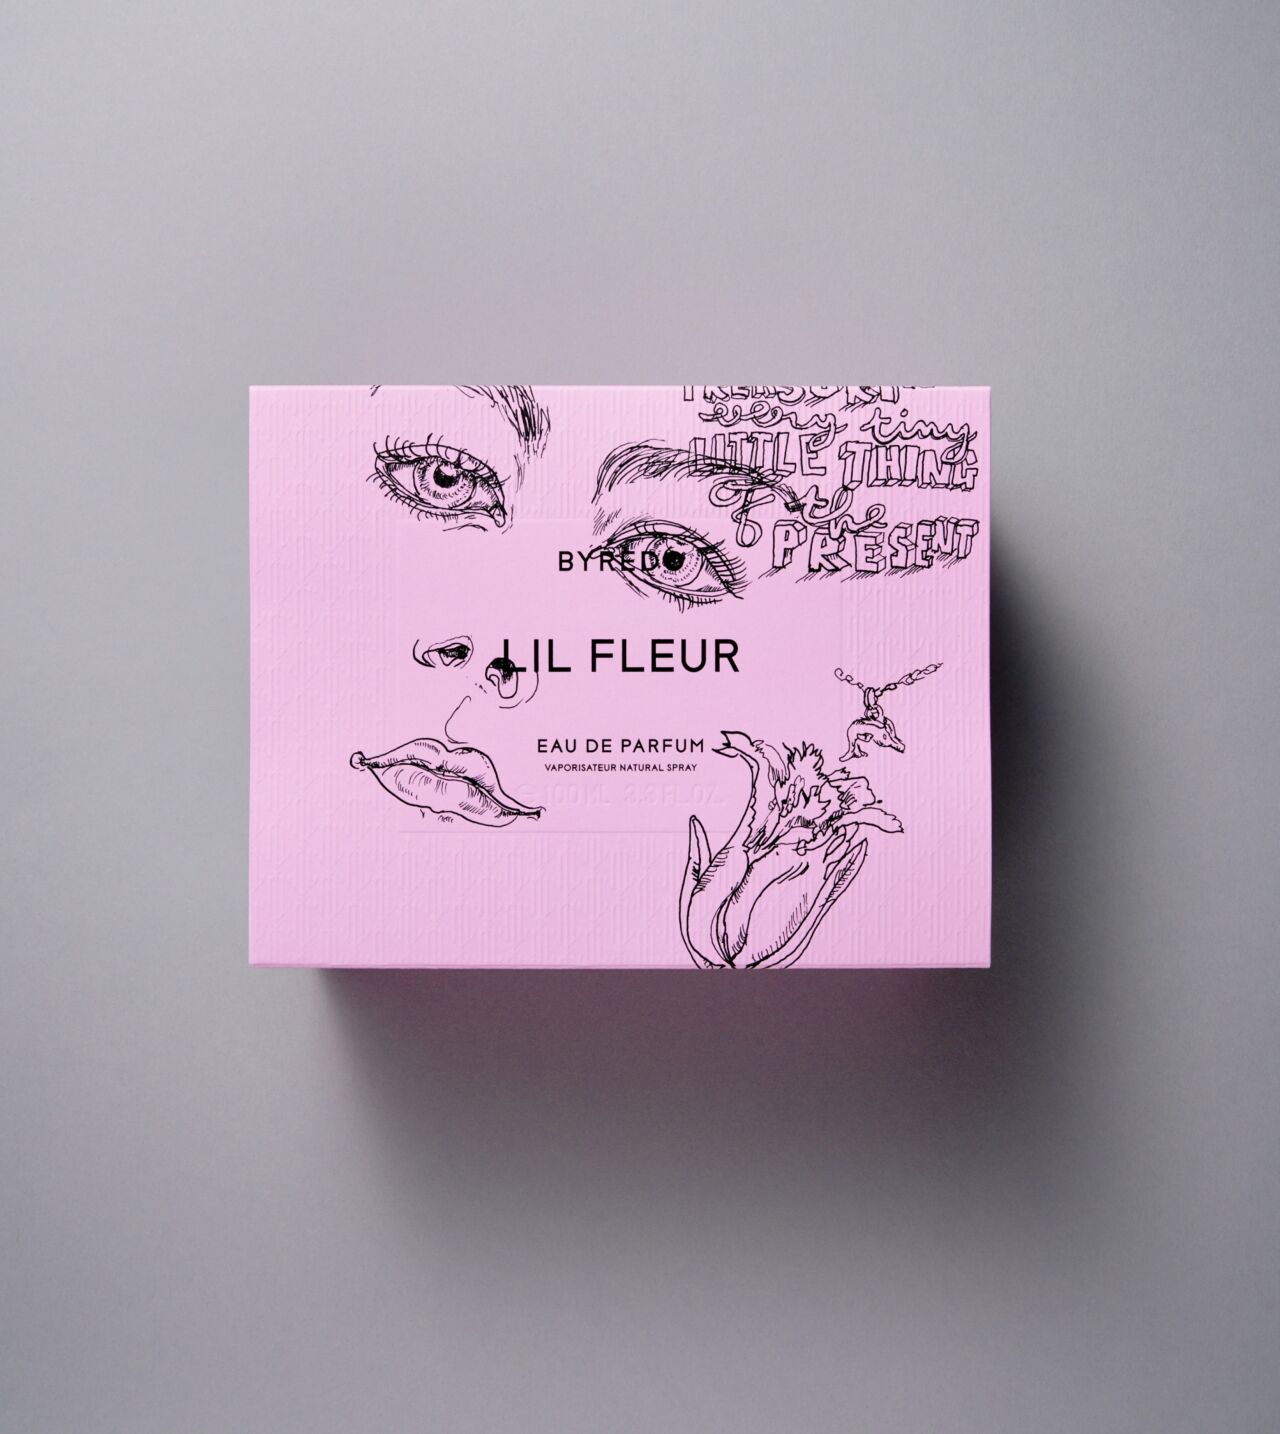 Lil Fleur Limited edition Eau de Parfum 100ml - BYREDO